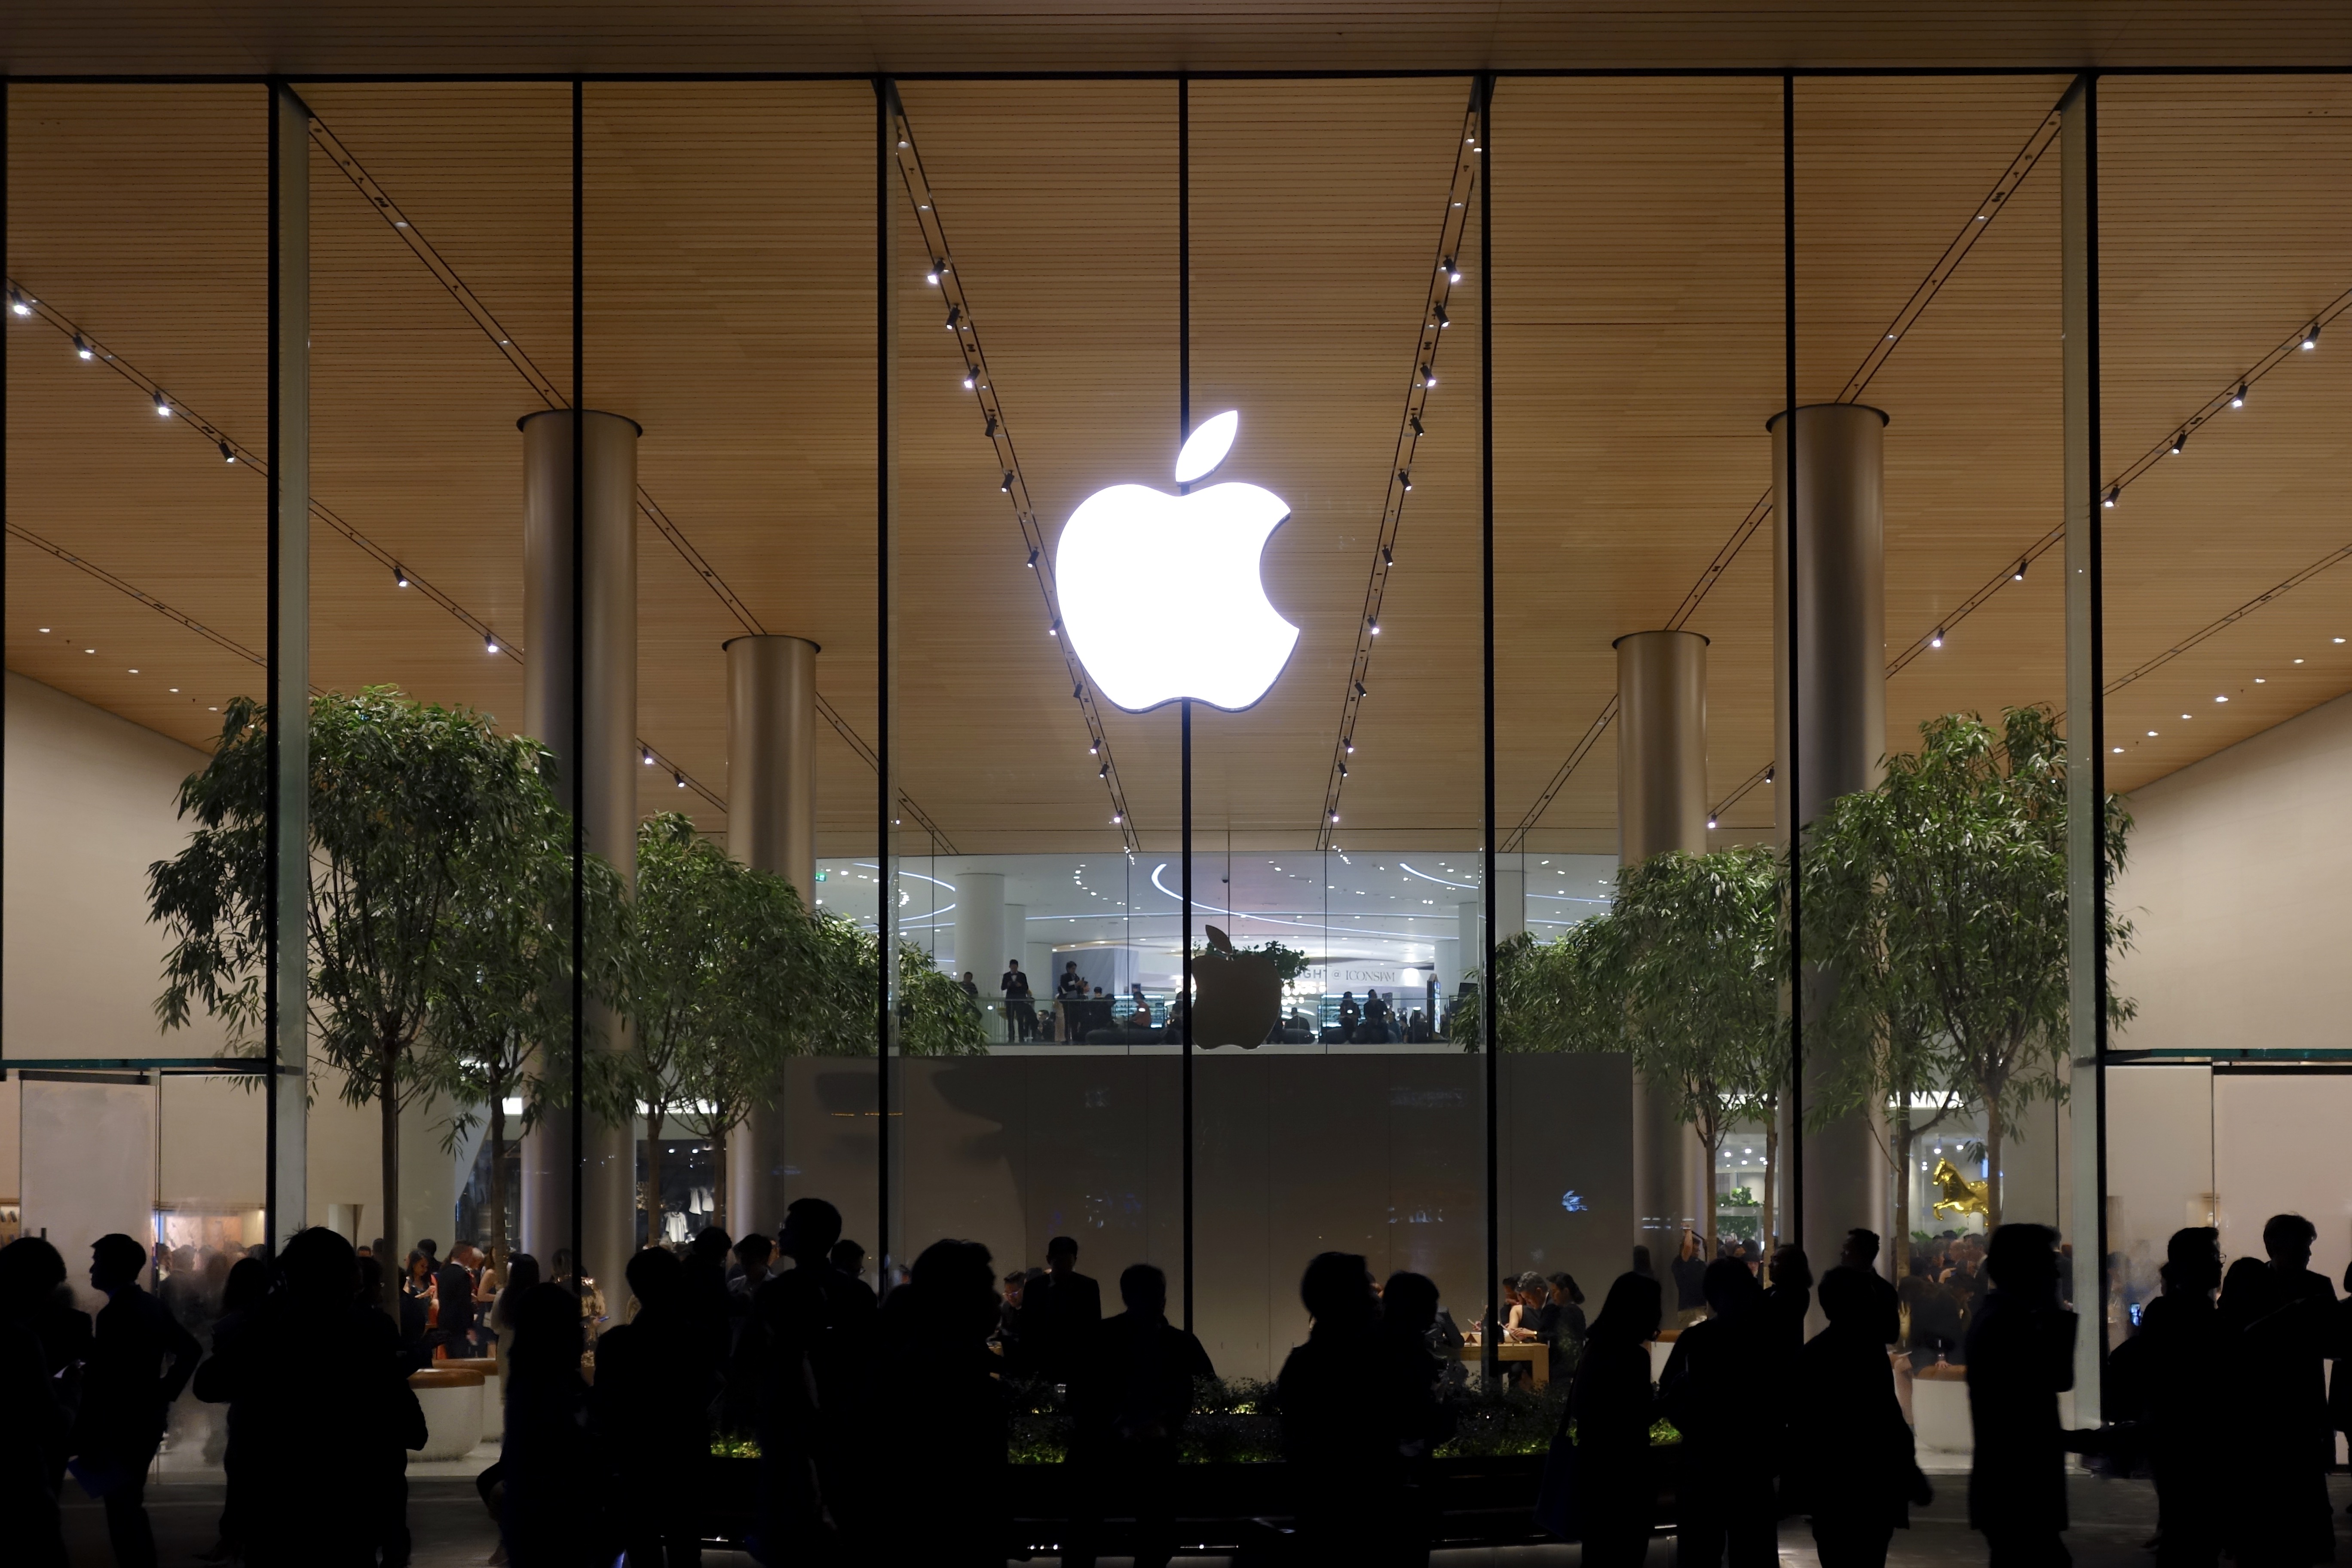 Apple Iconsiam opens in Bangkok - Apple